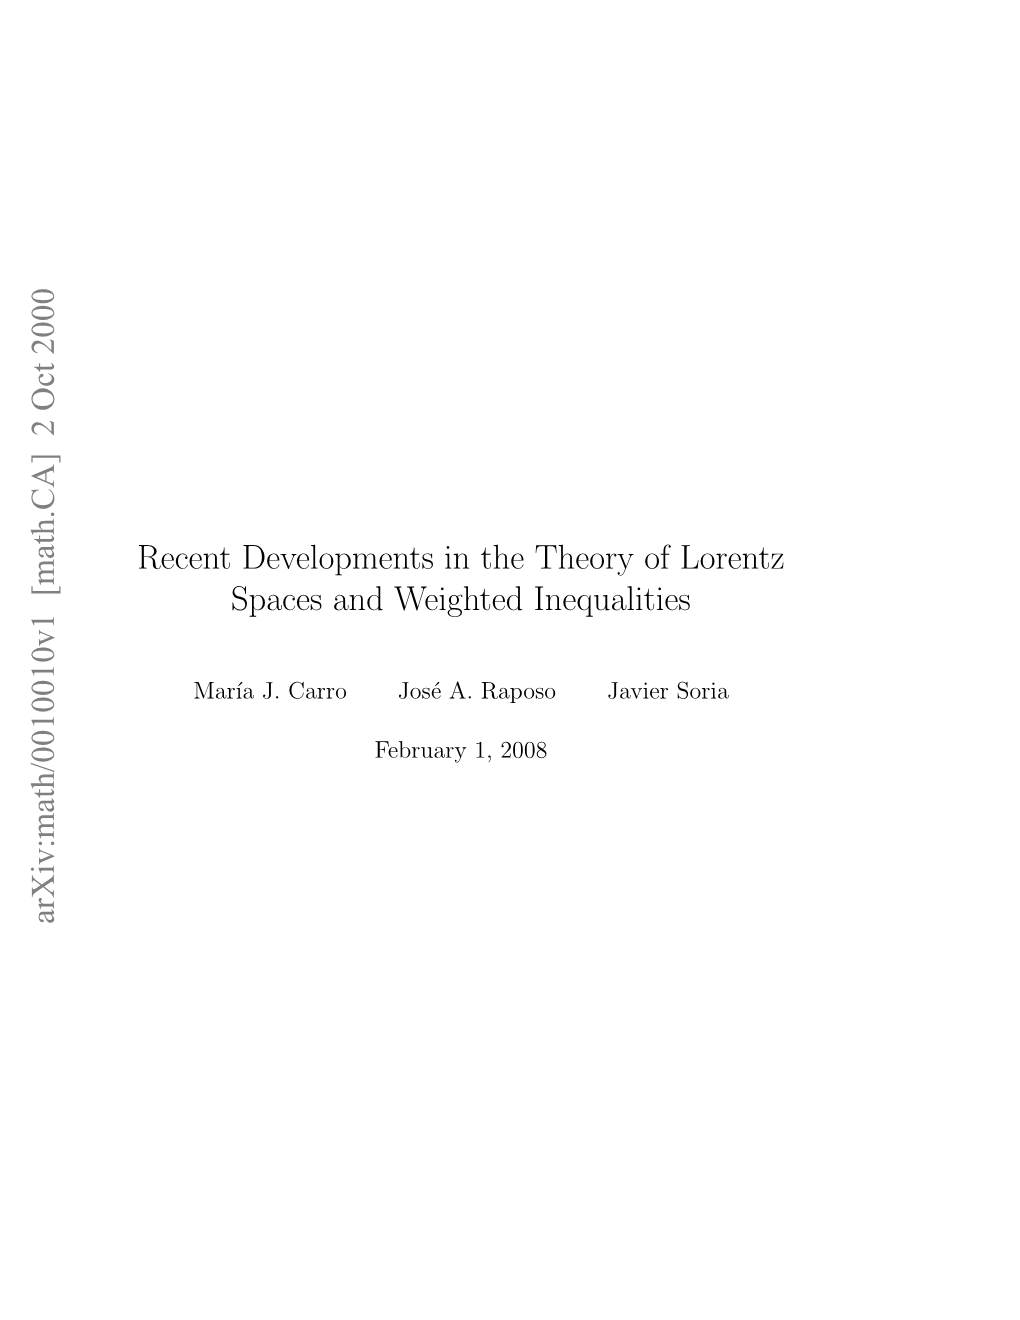 [Math.CA] 2 Oct 2000 Eetdvlpet Nteter Florentz of Theory the in Developments Recent A´ Aj Ar O´ .Rps Airsoria Javier Raposo Jos´E A